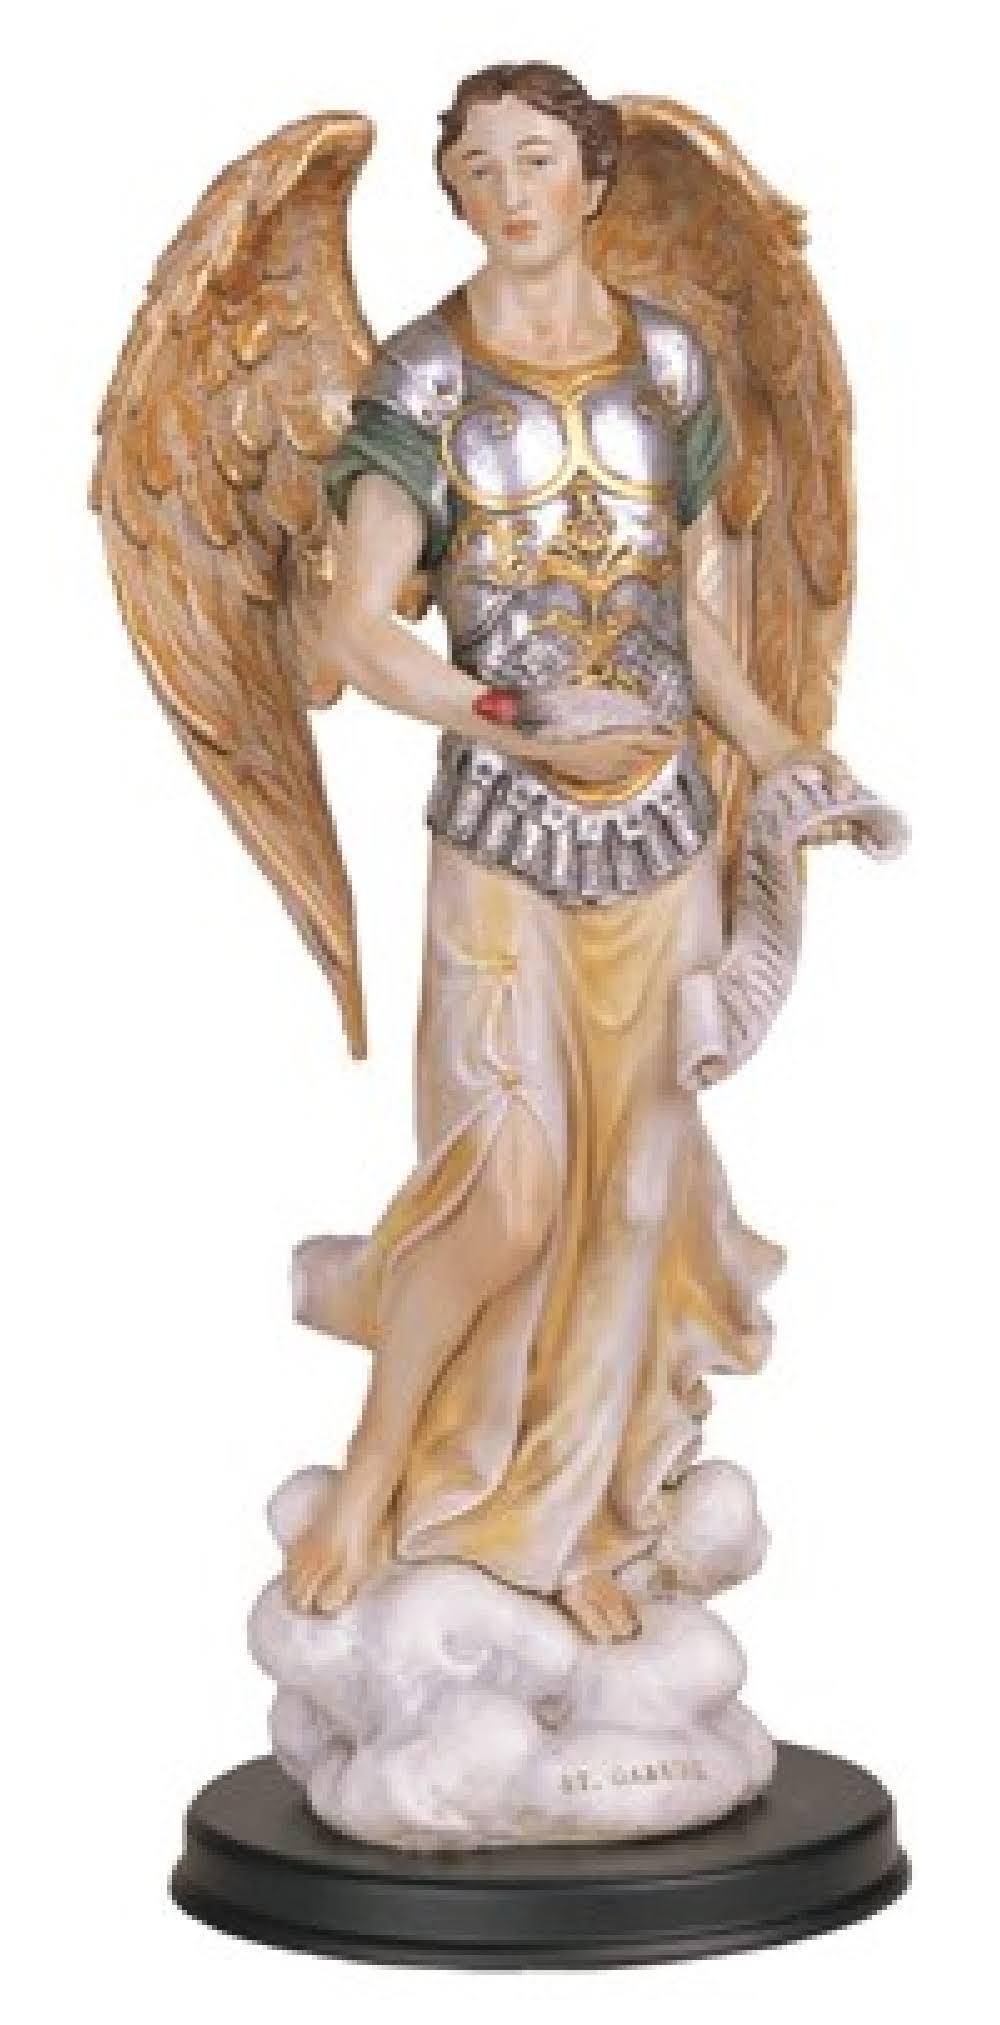 Stealstreet Ss-g-212.54 Archangel Gabriel Holy Figurine Religious Decor 12"